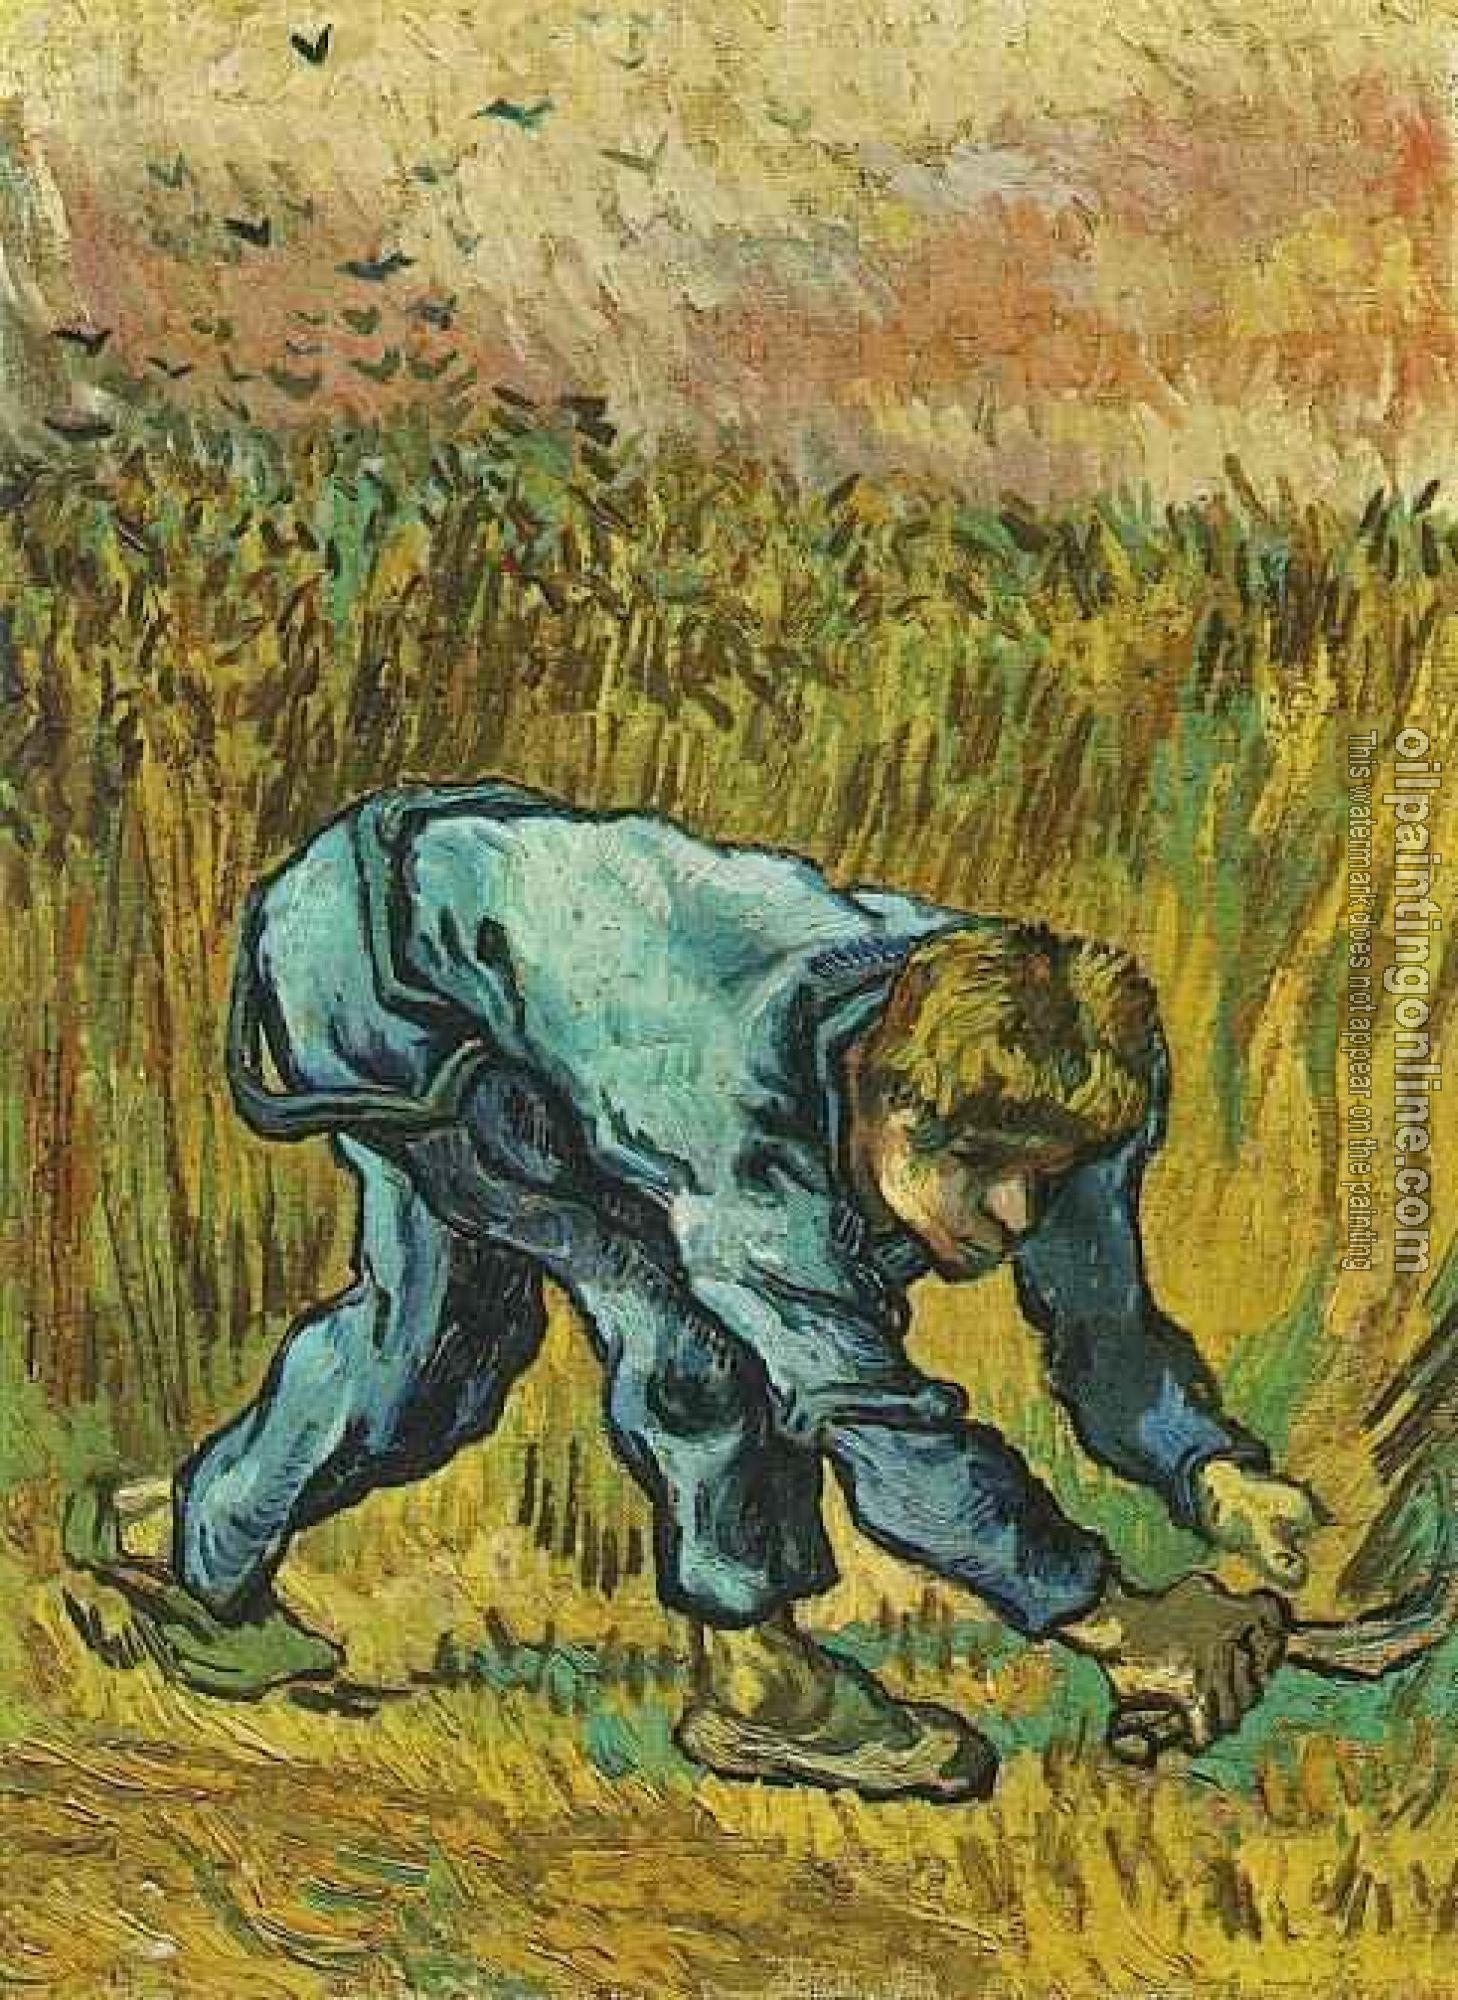 Gogh, Vincent van - Reaper with Sickle